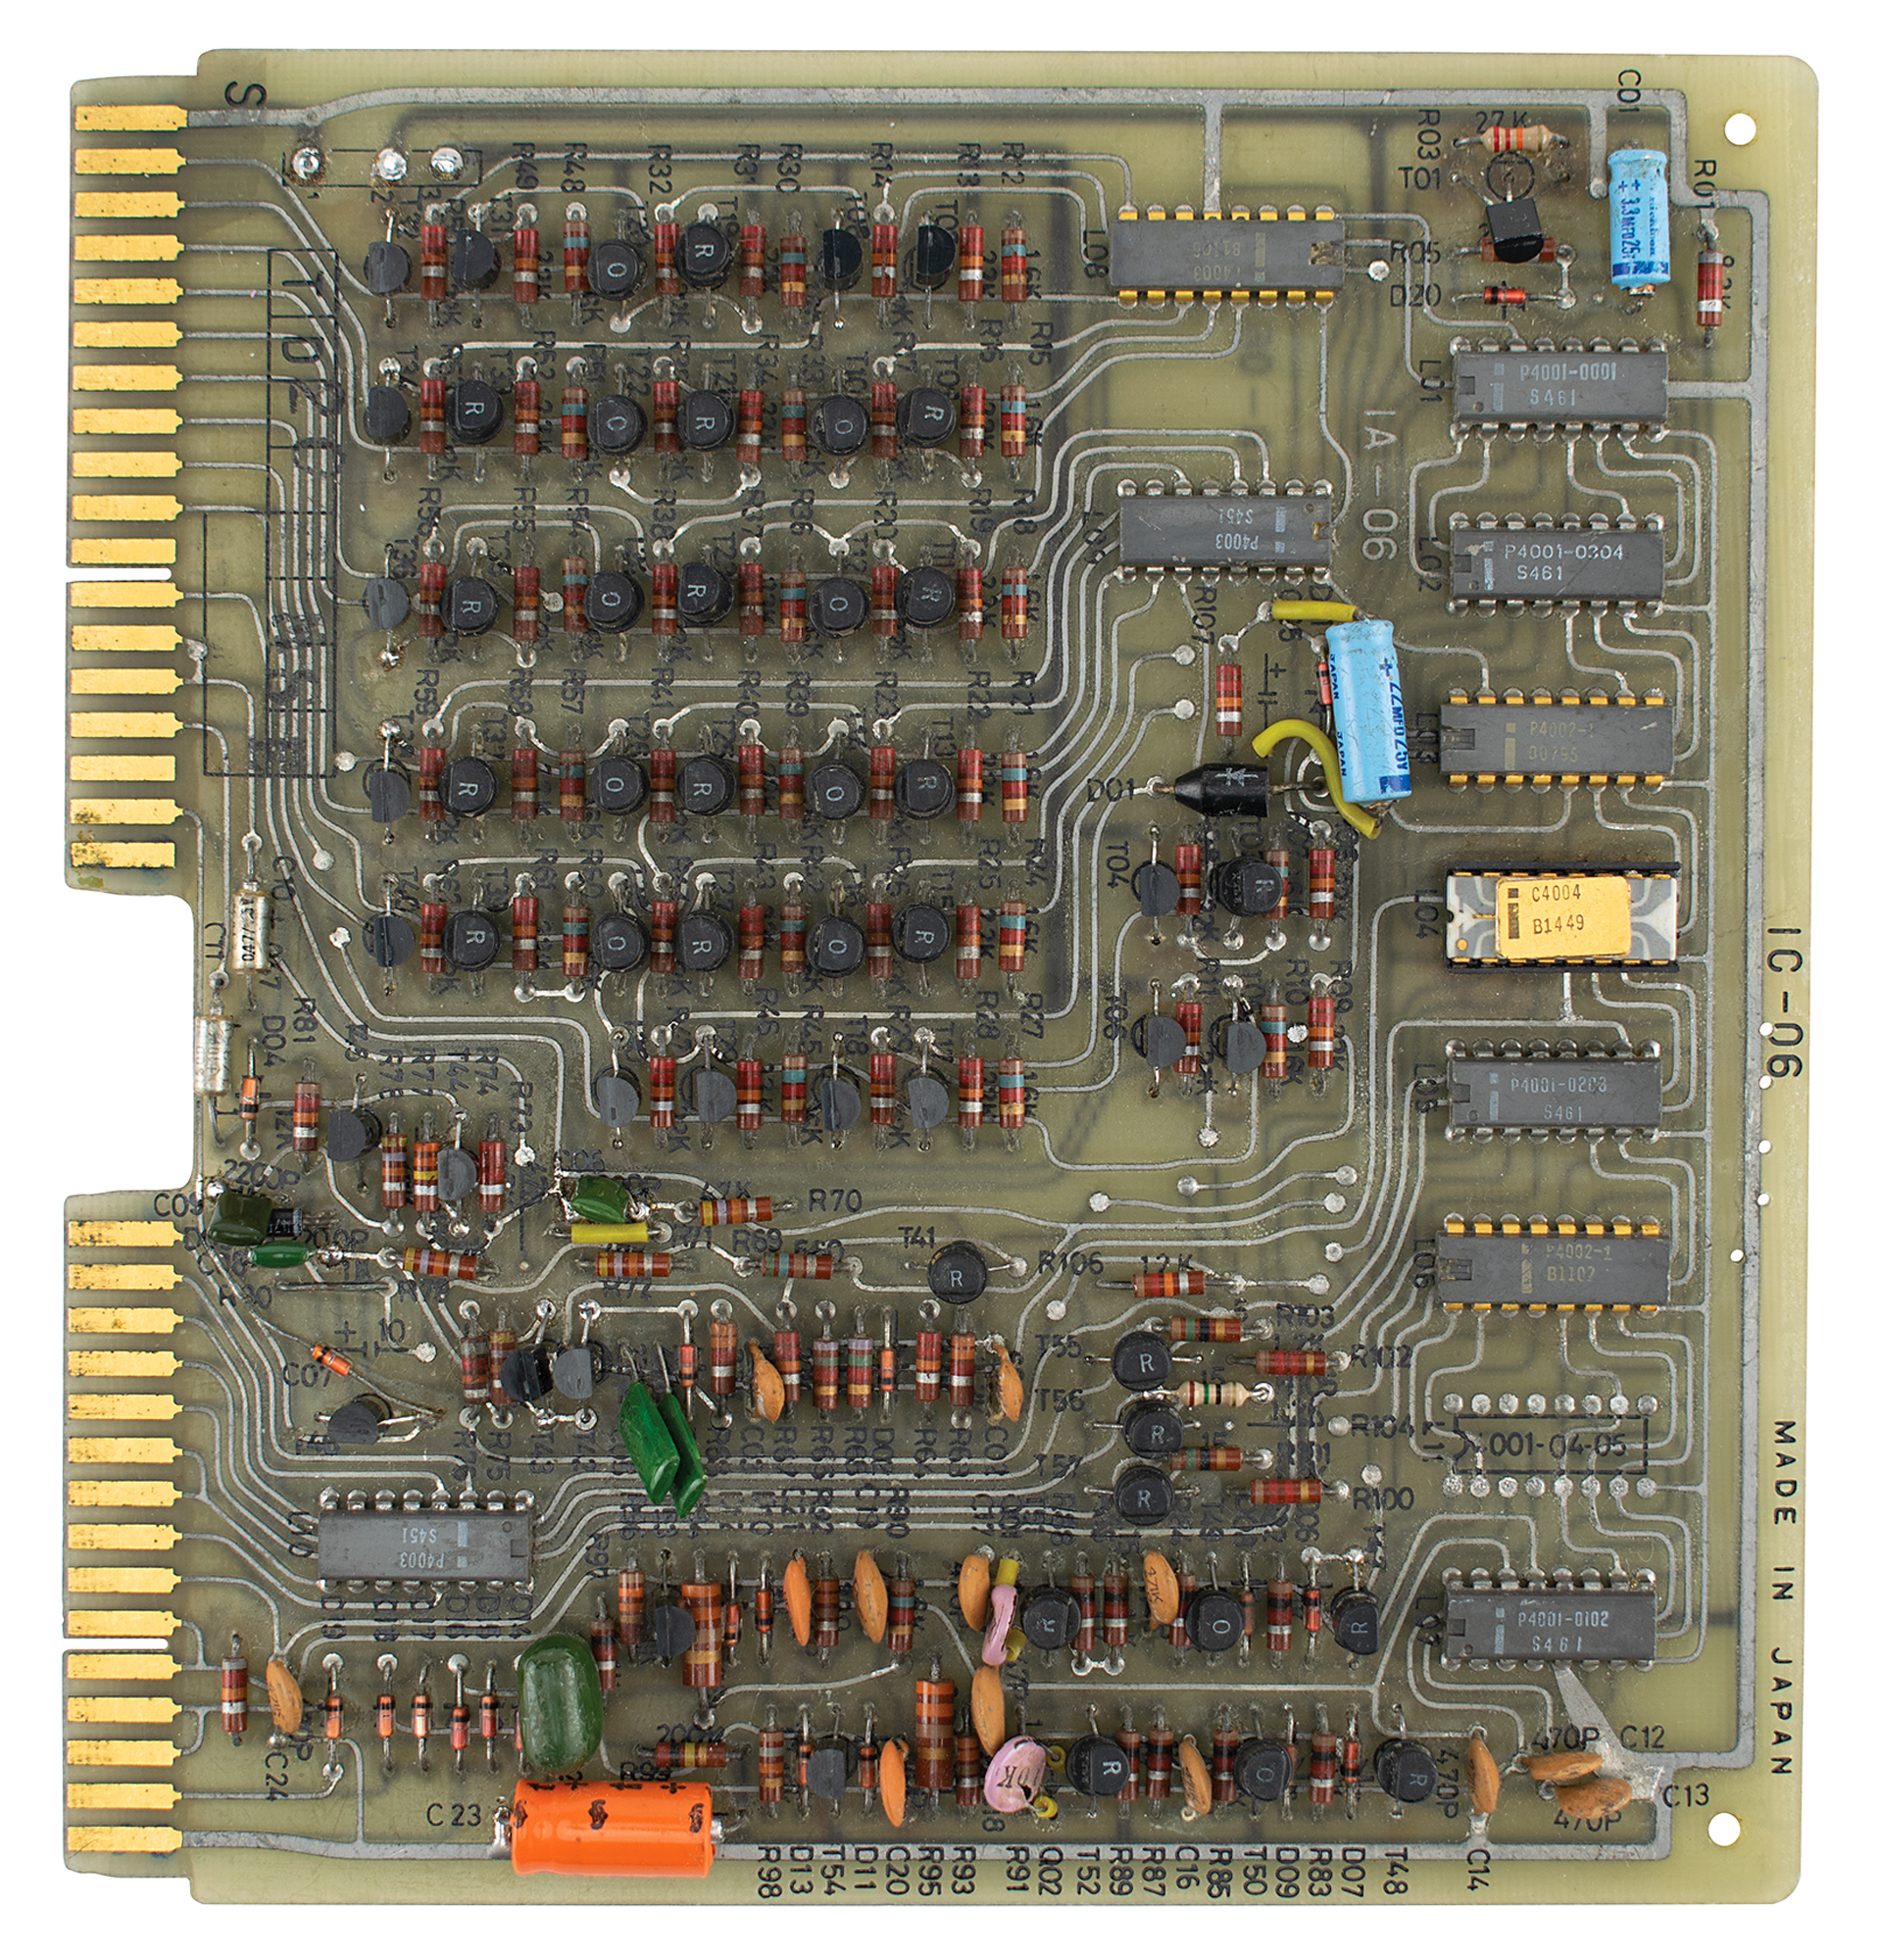 Lot #7018 Busicom 141 Circuit Board with Intel 4004 CPU